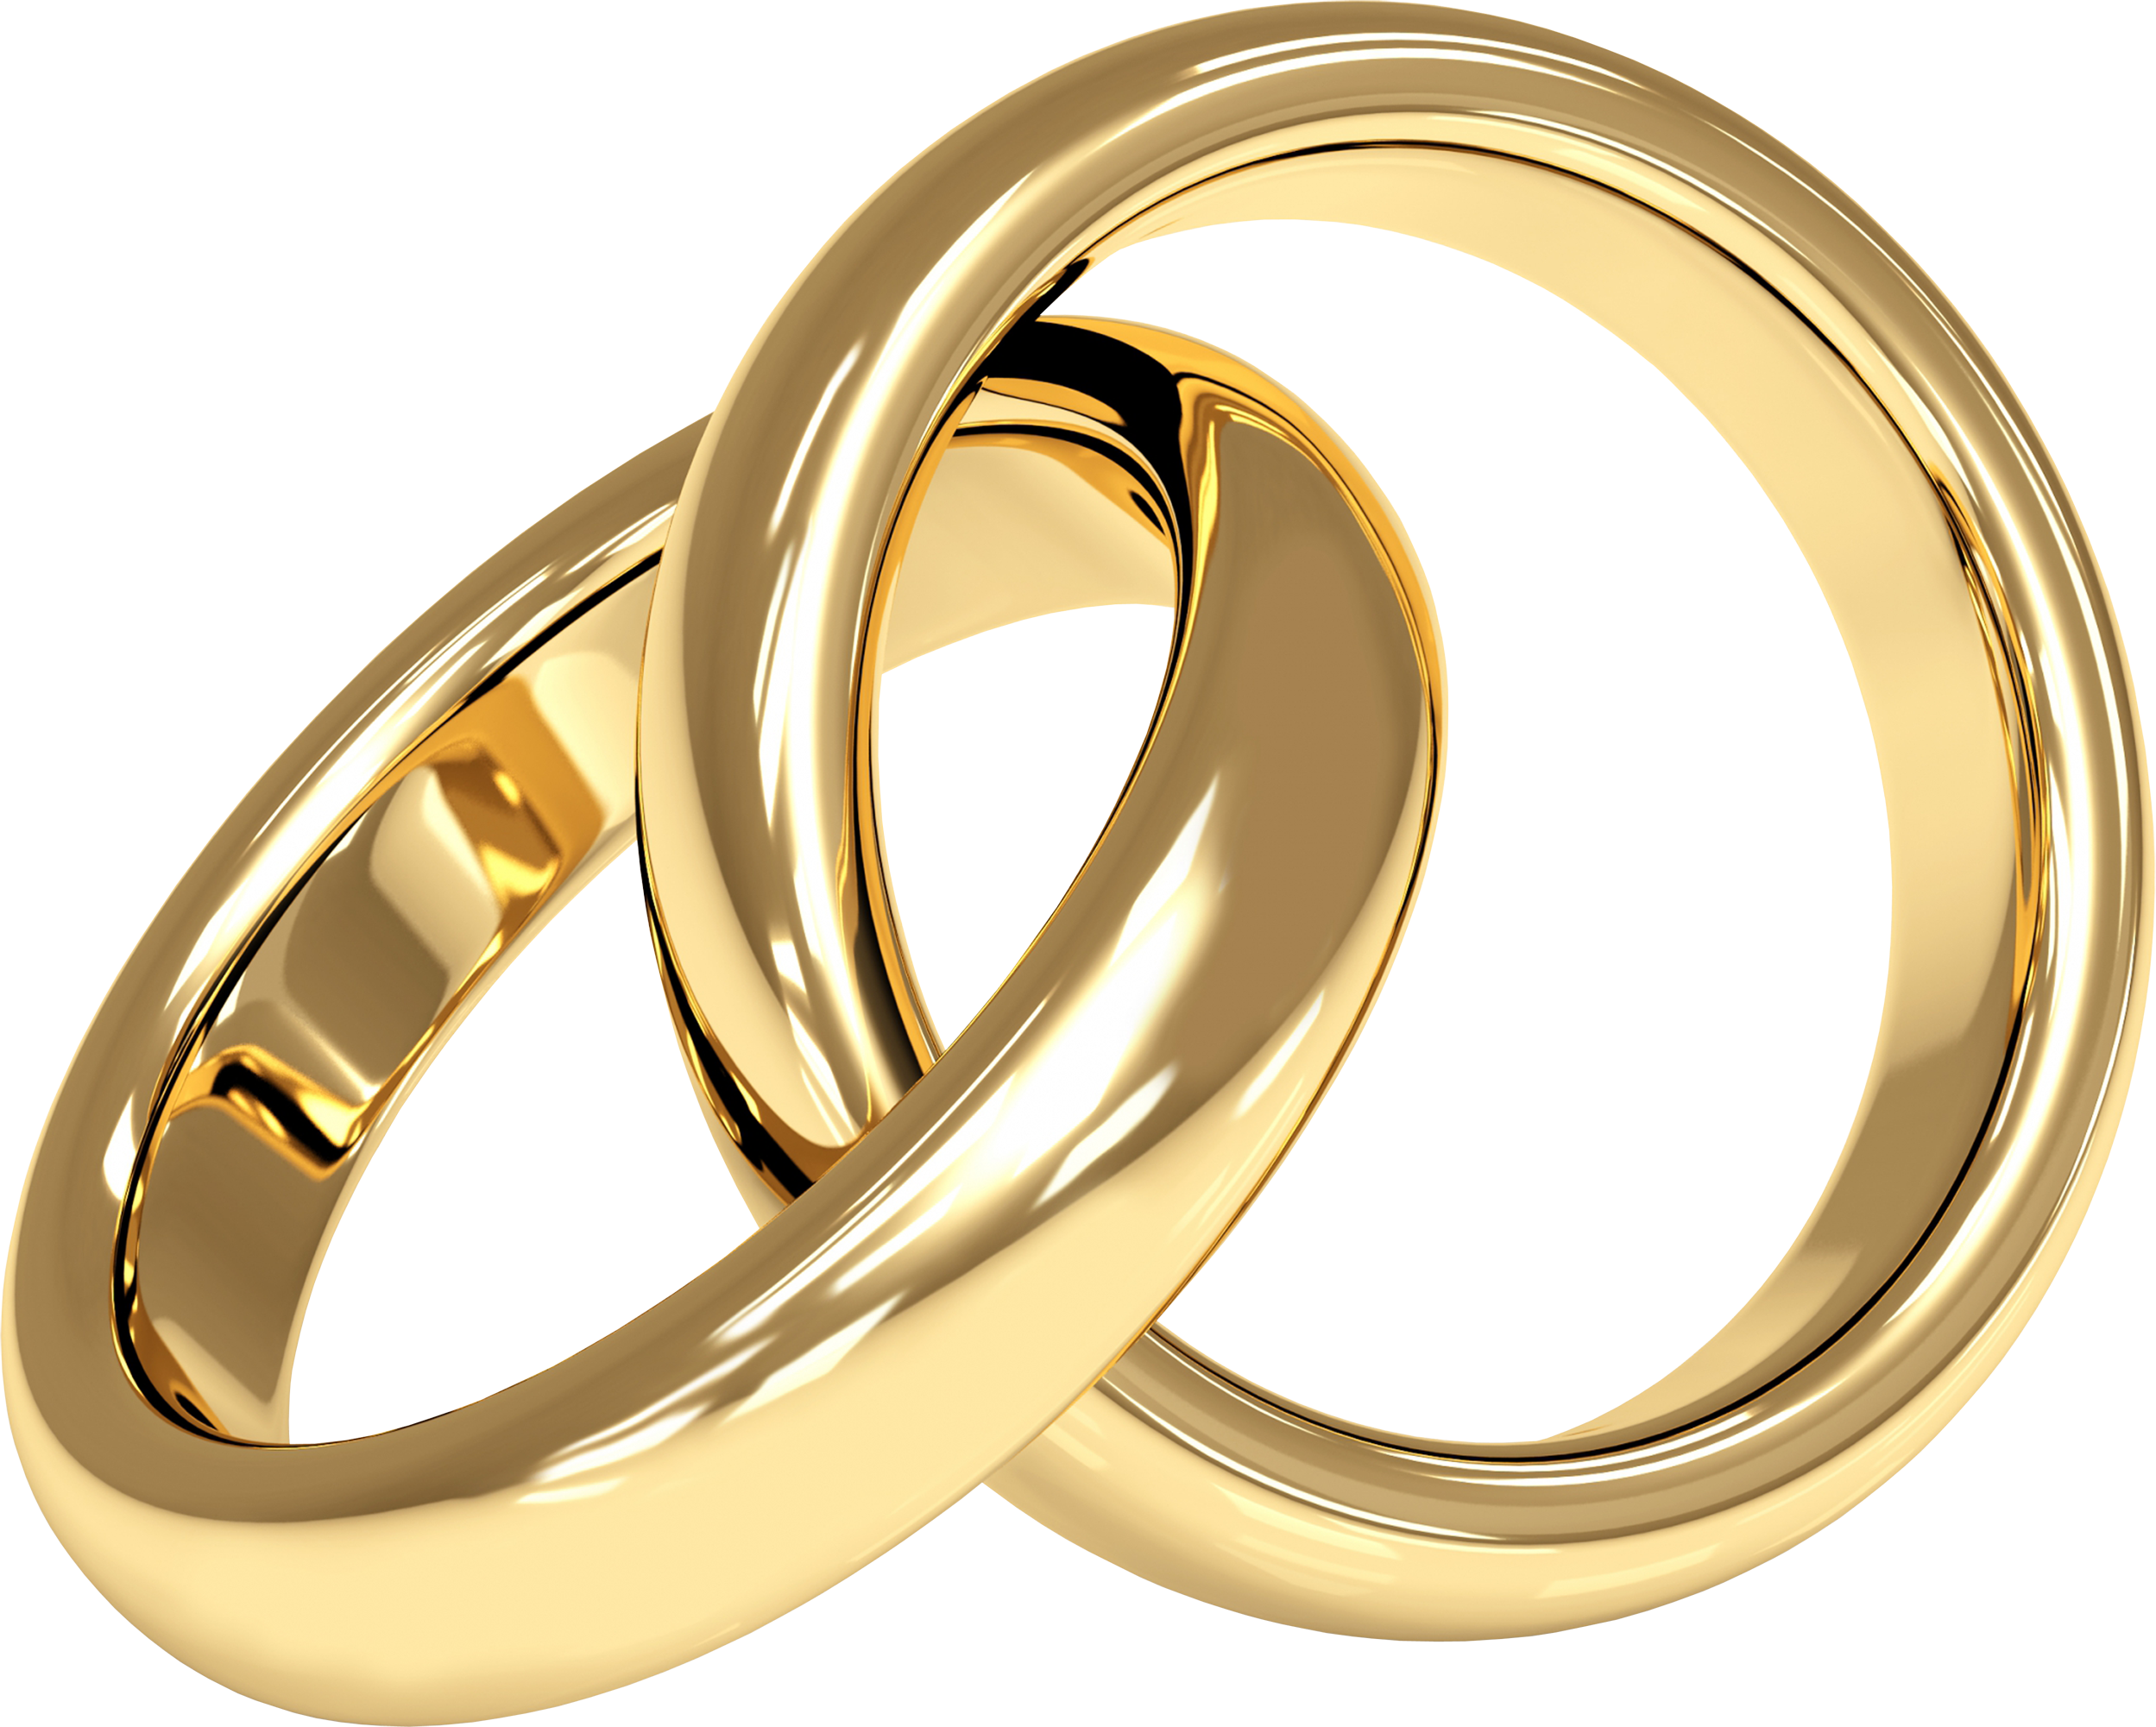 Evlilik yüzüğü